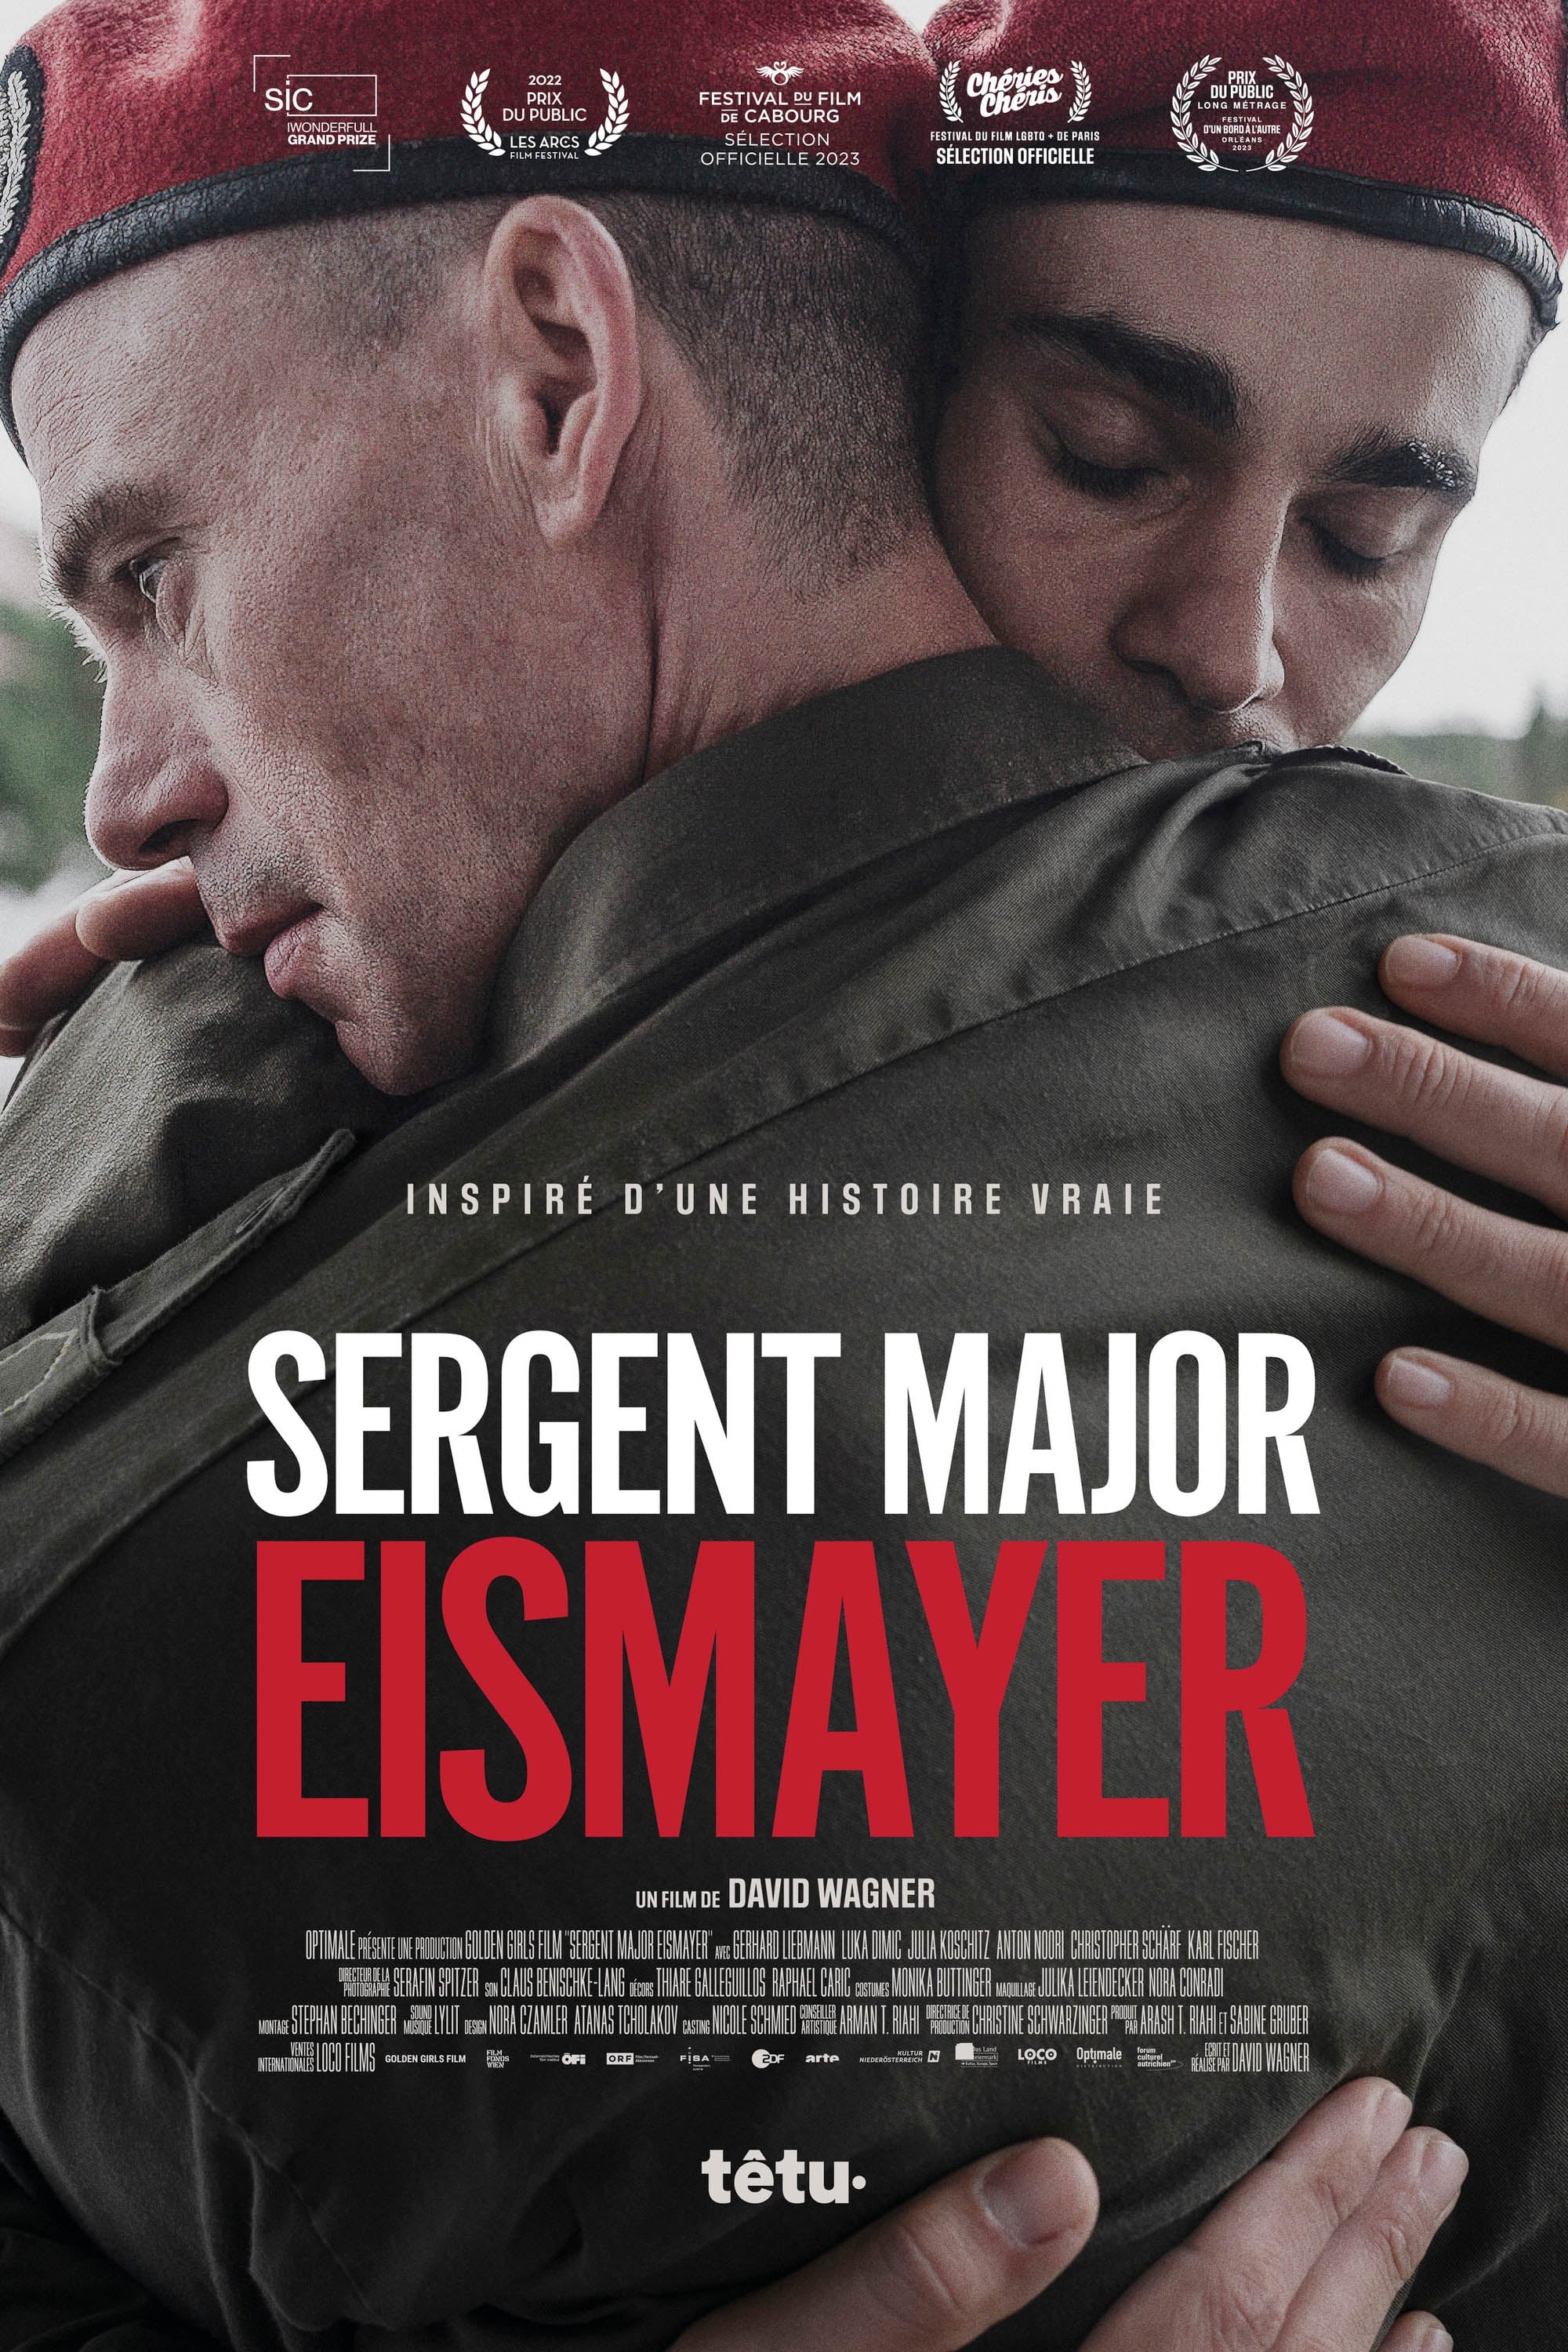 Sergent Major Eismayer